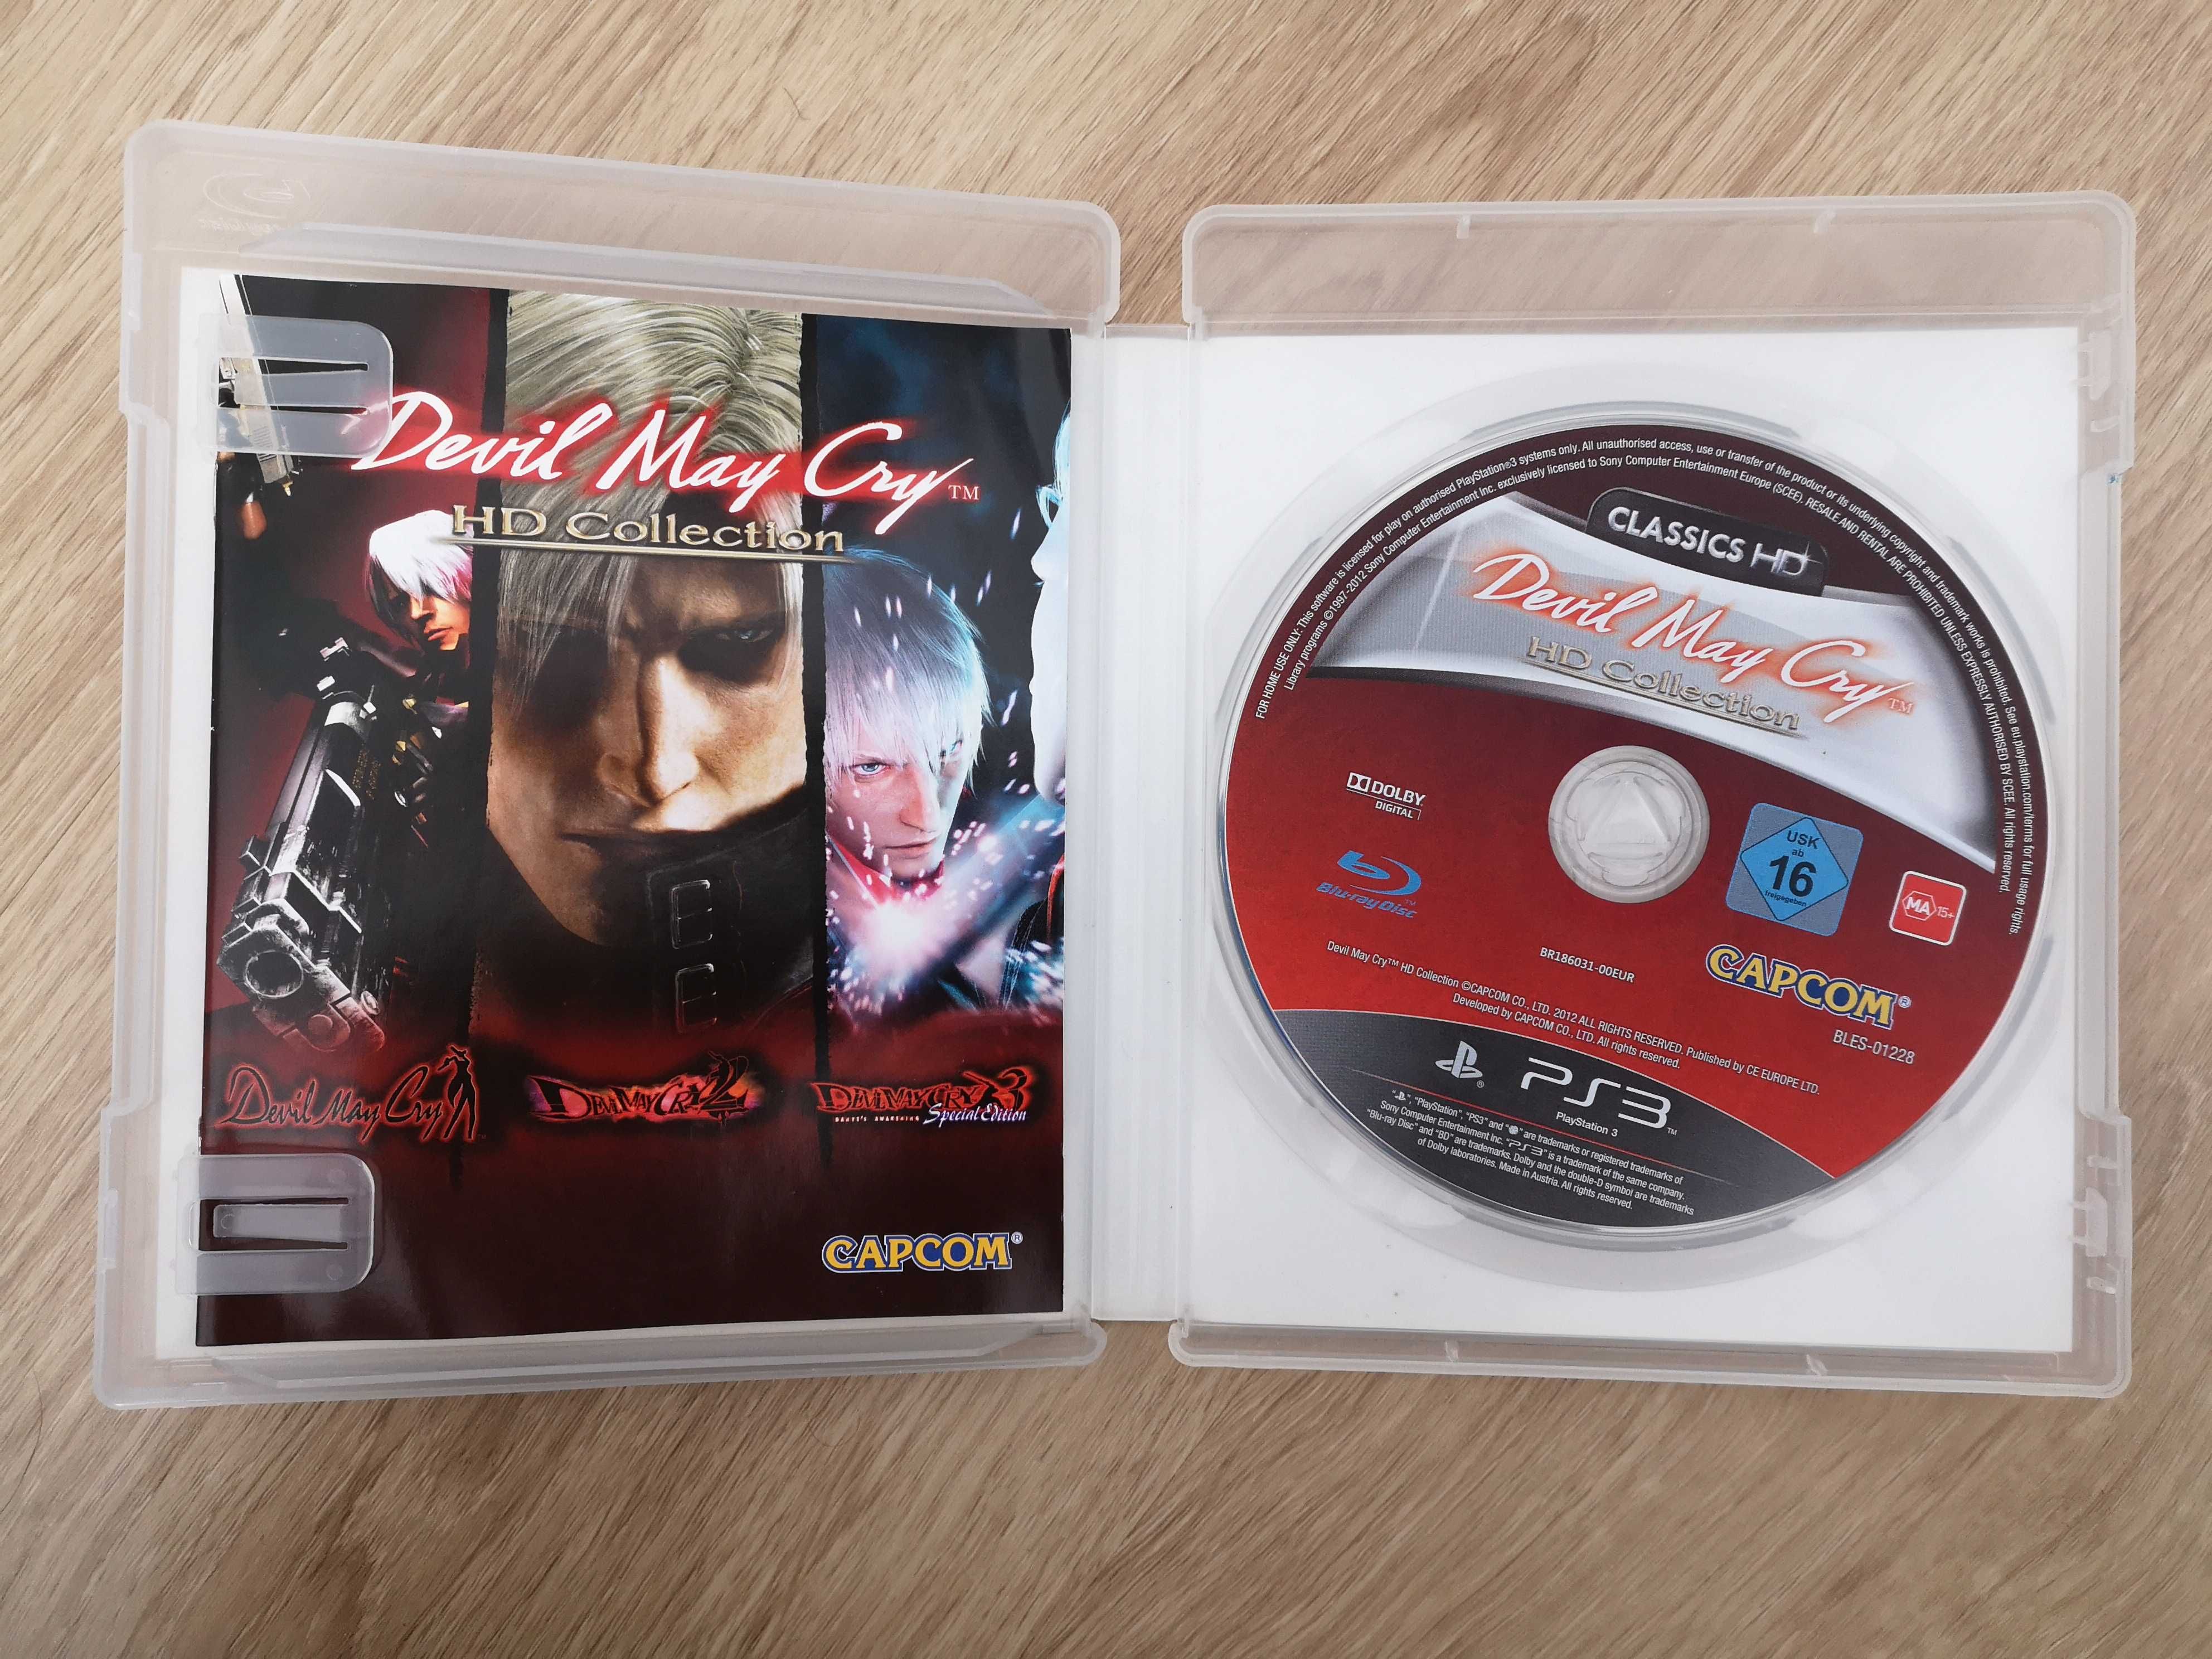 Devil May Cry HD Collection + 2 jogos de oferta